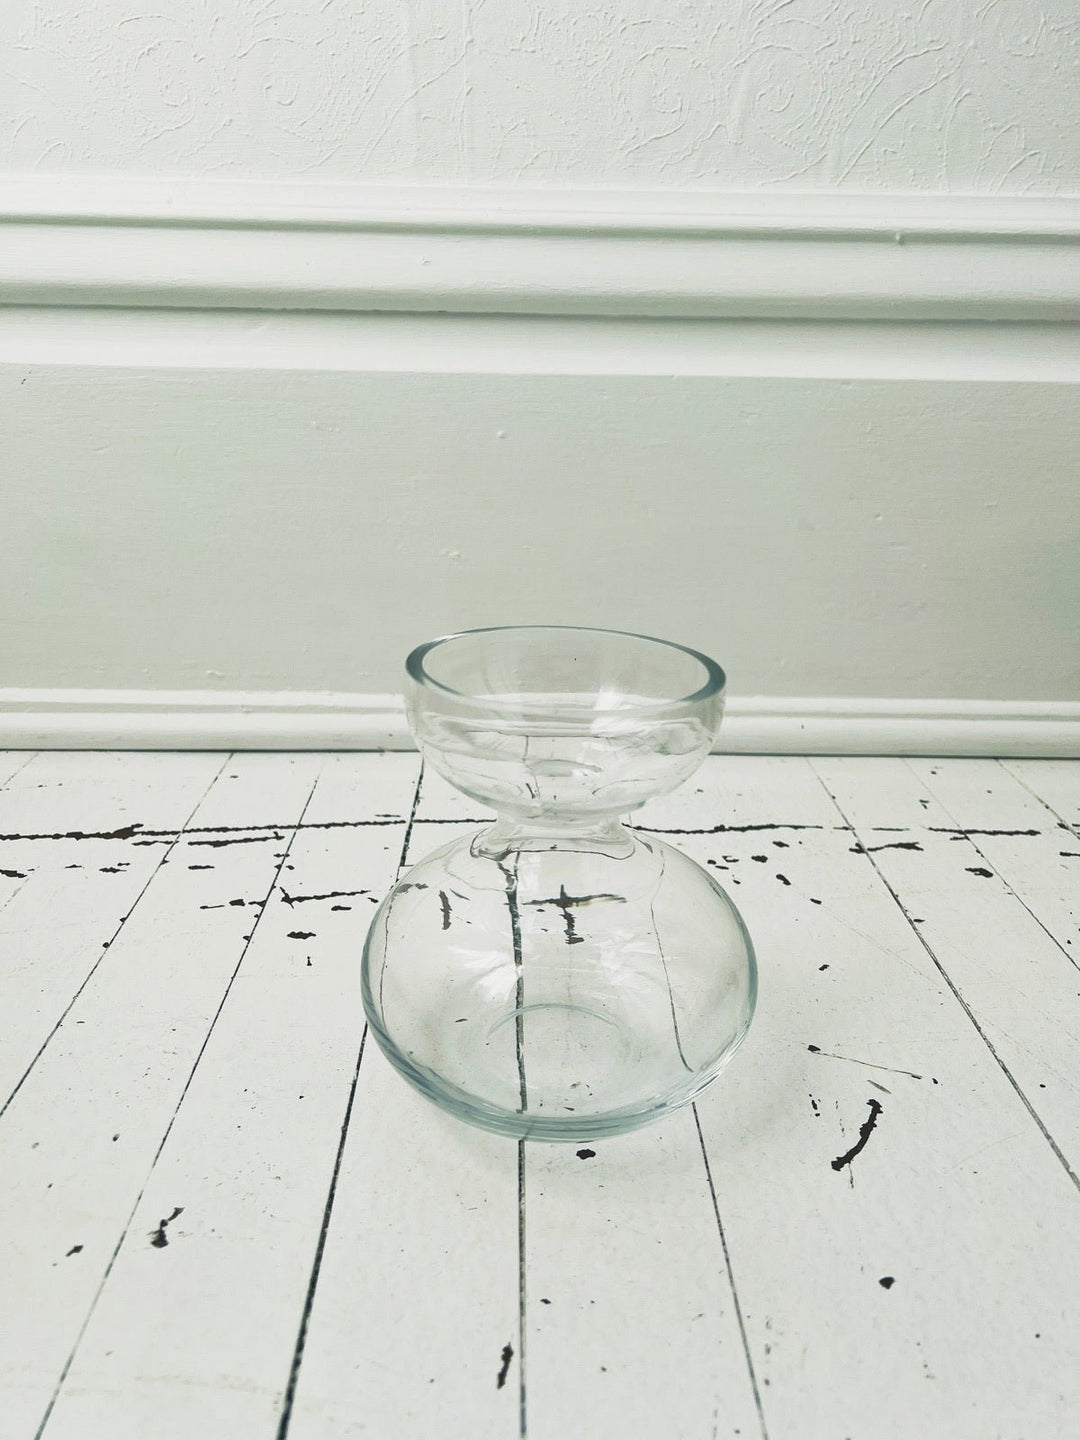 Hourglass Vase - Spring Sweet